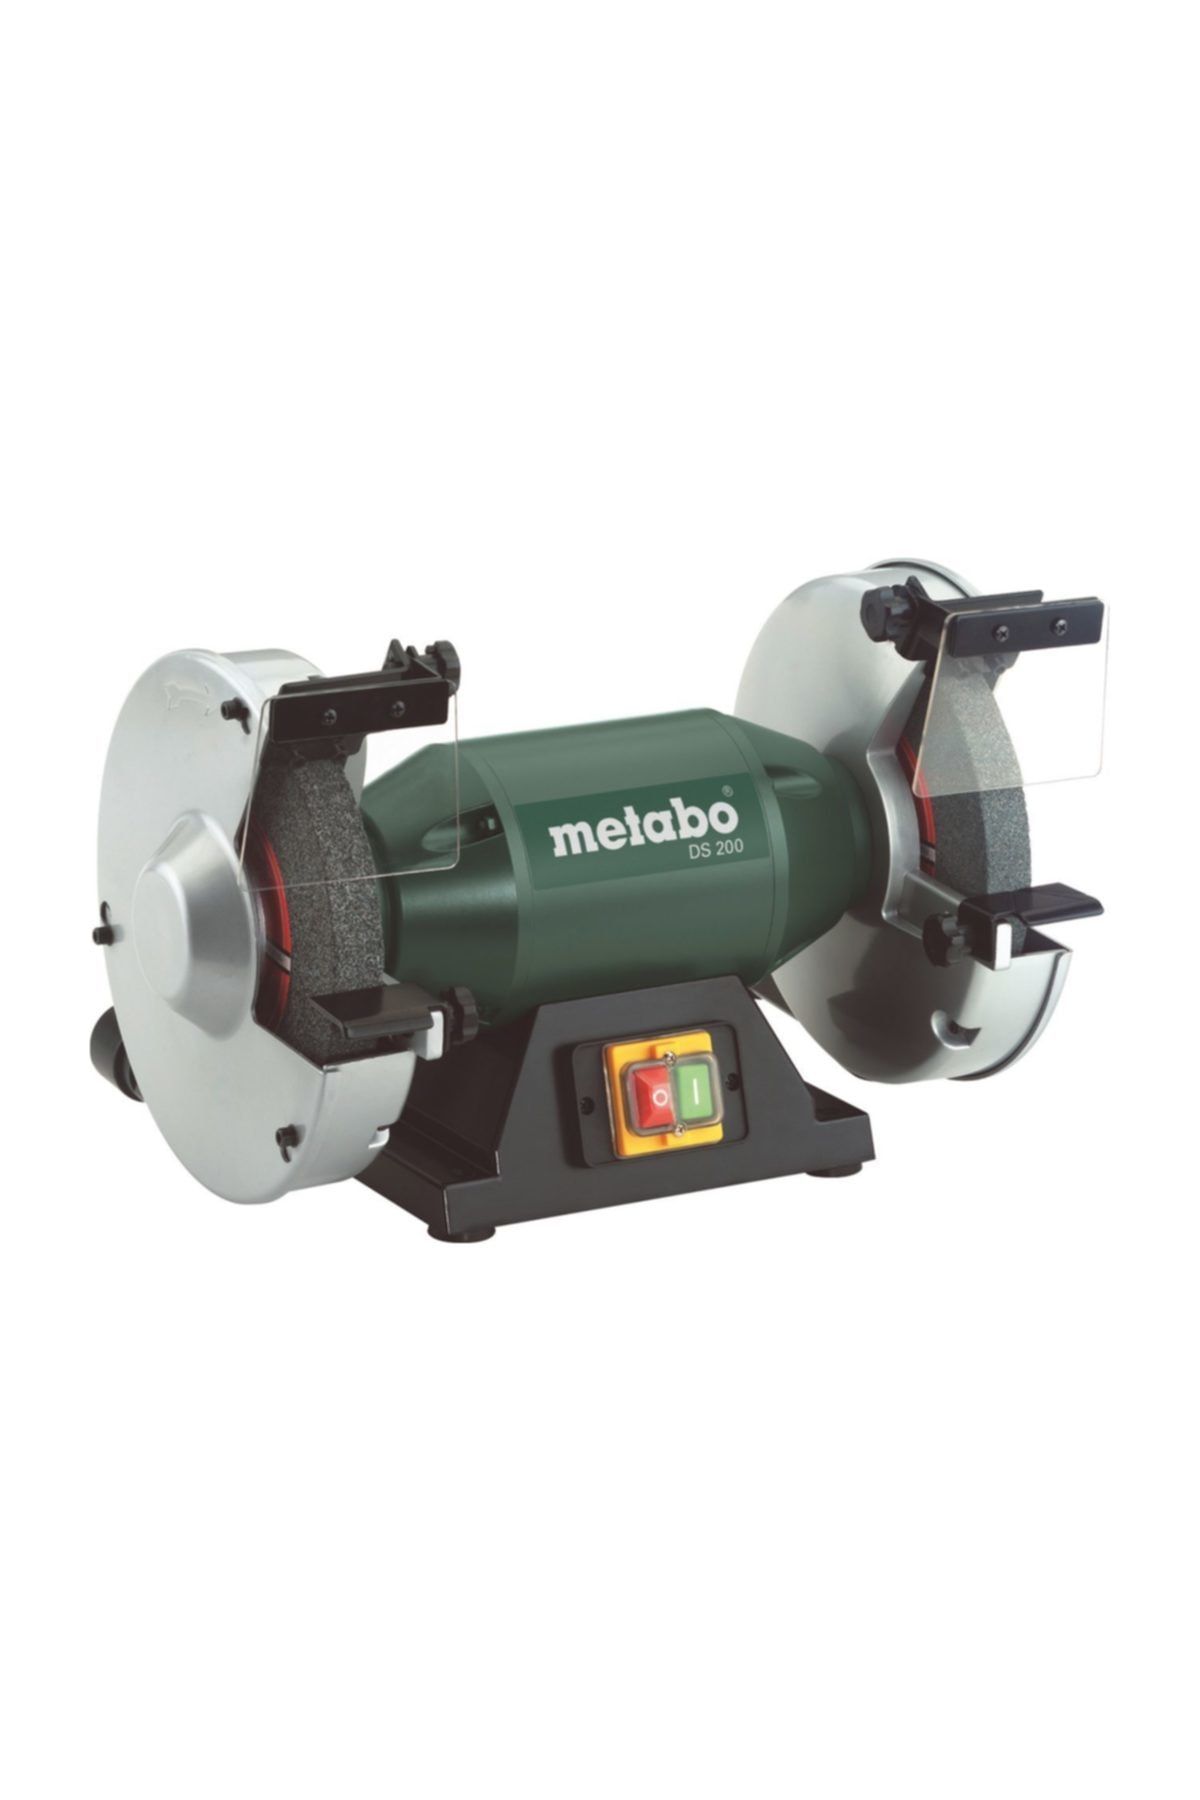 Metabo Dsd 200 Taş Motoru